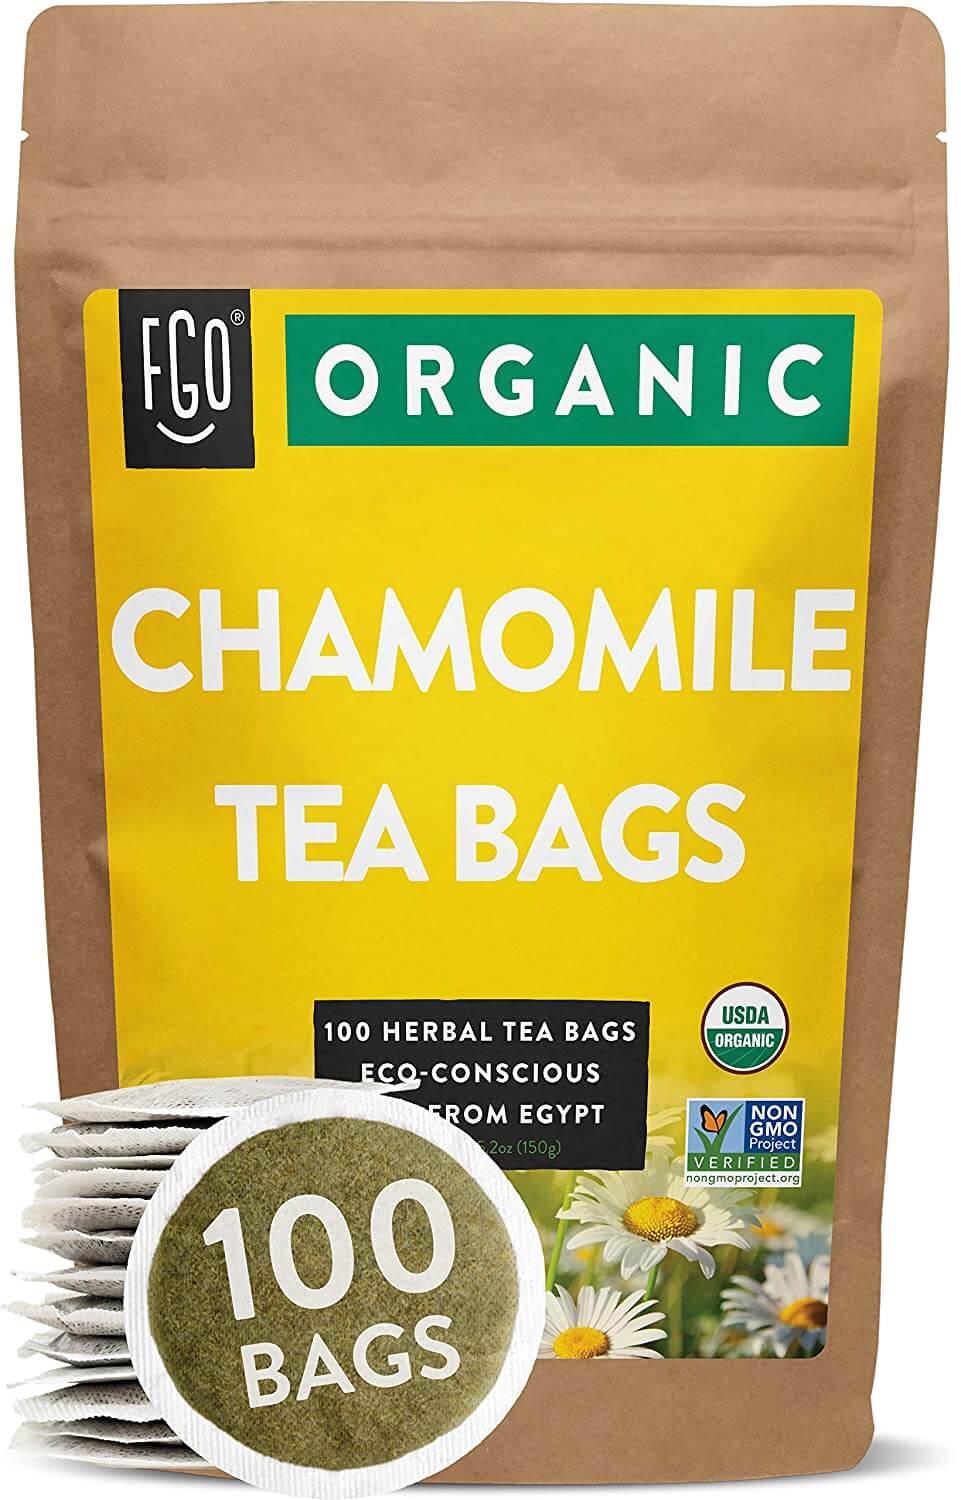 FGO Organic Chamomile Tea